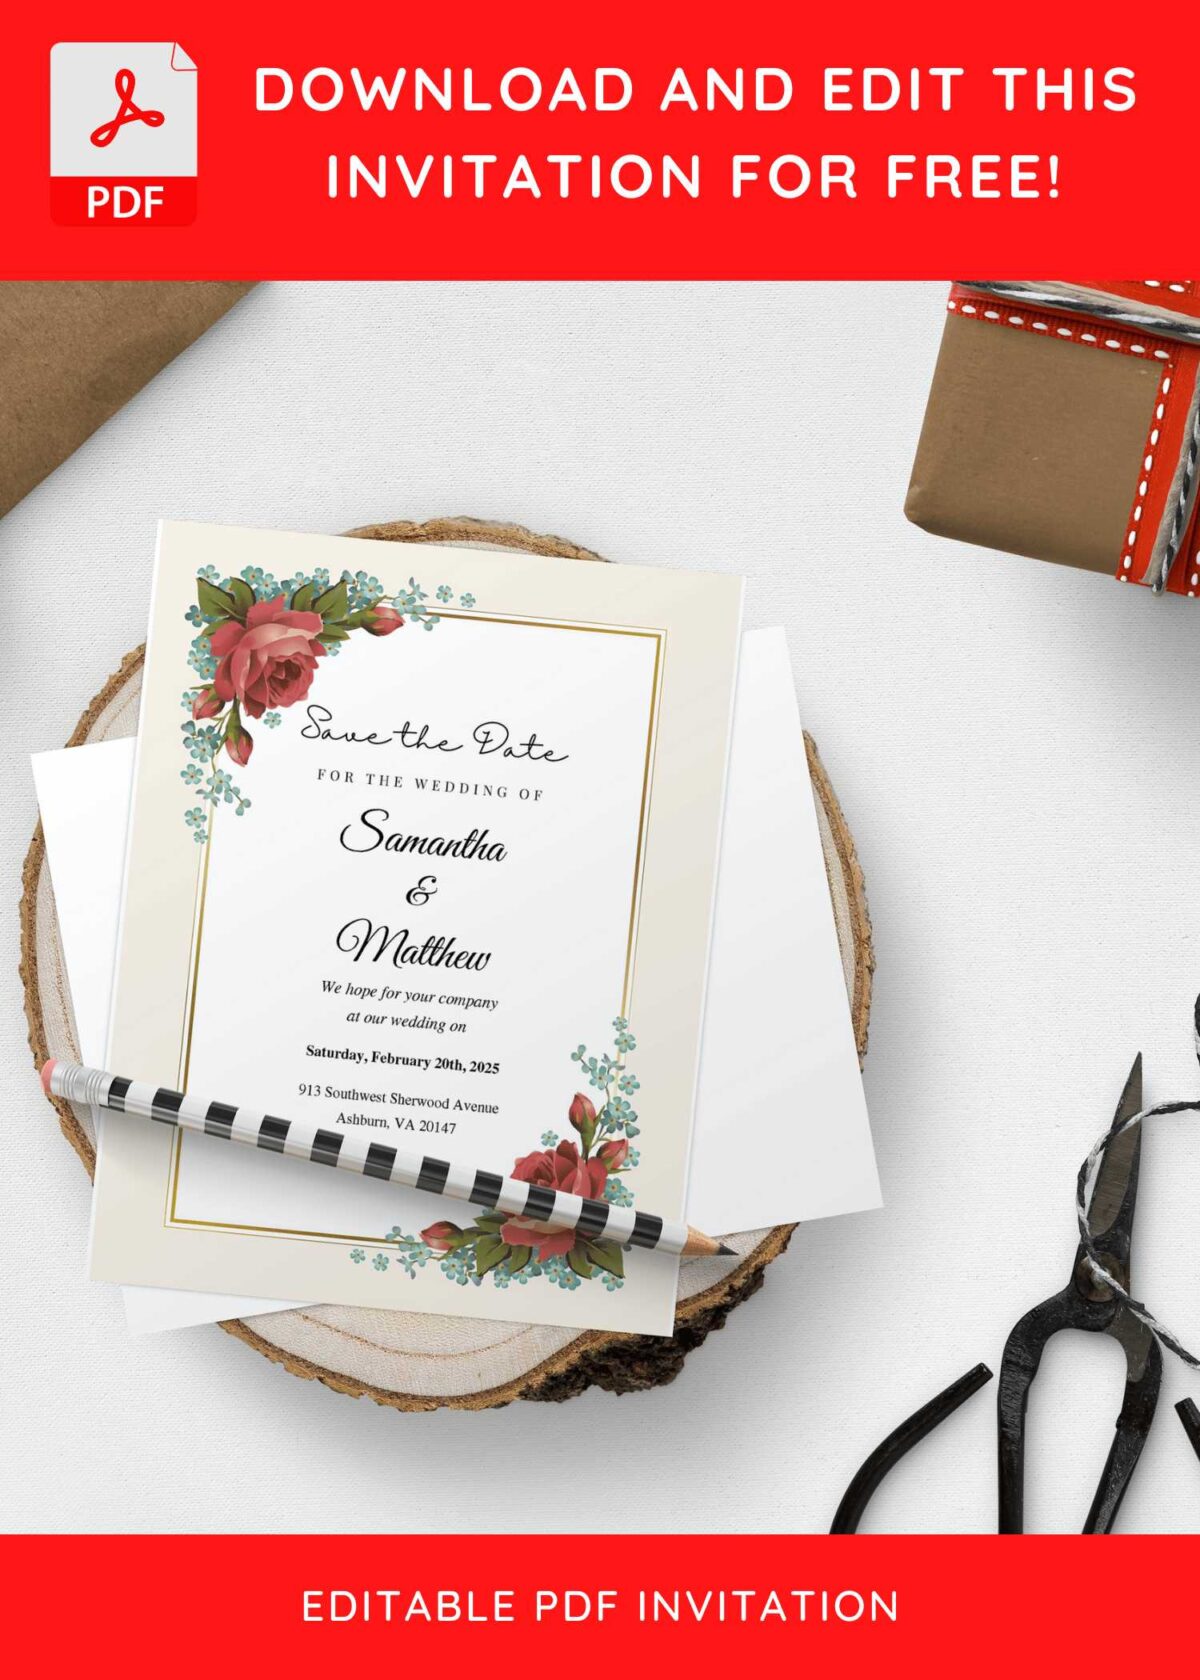 (Free Editable PDF) Soft And Subtle Floral Wedding Invitation Templates F